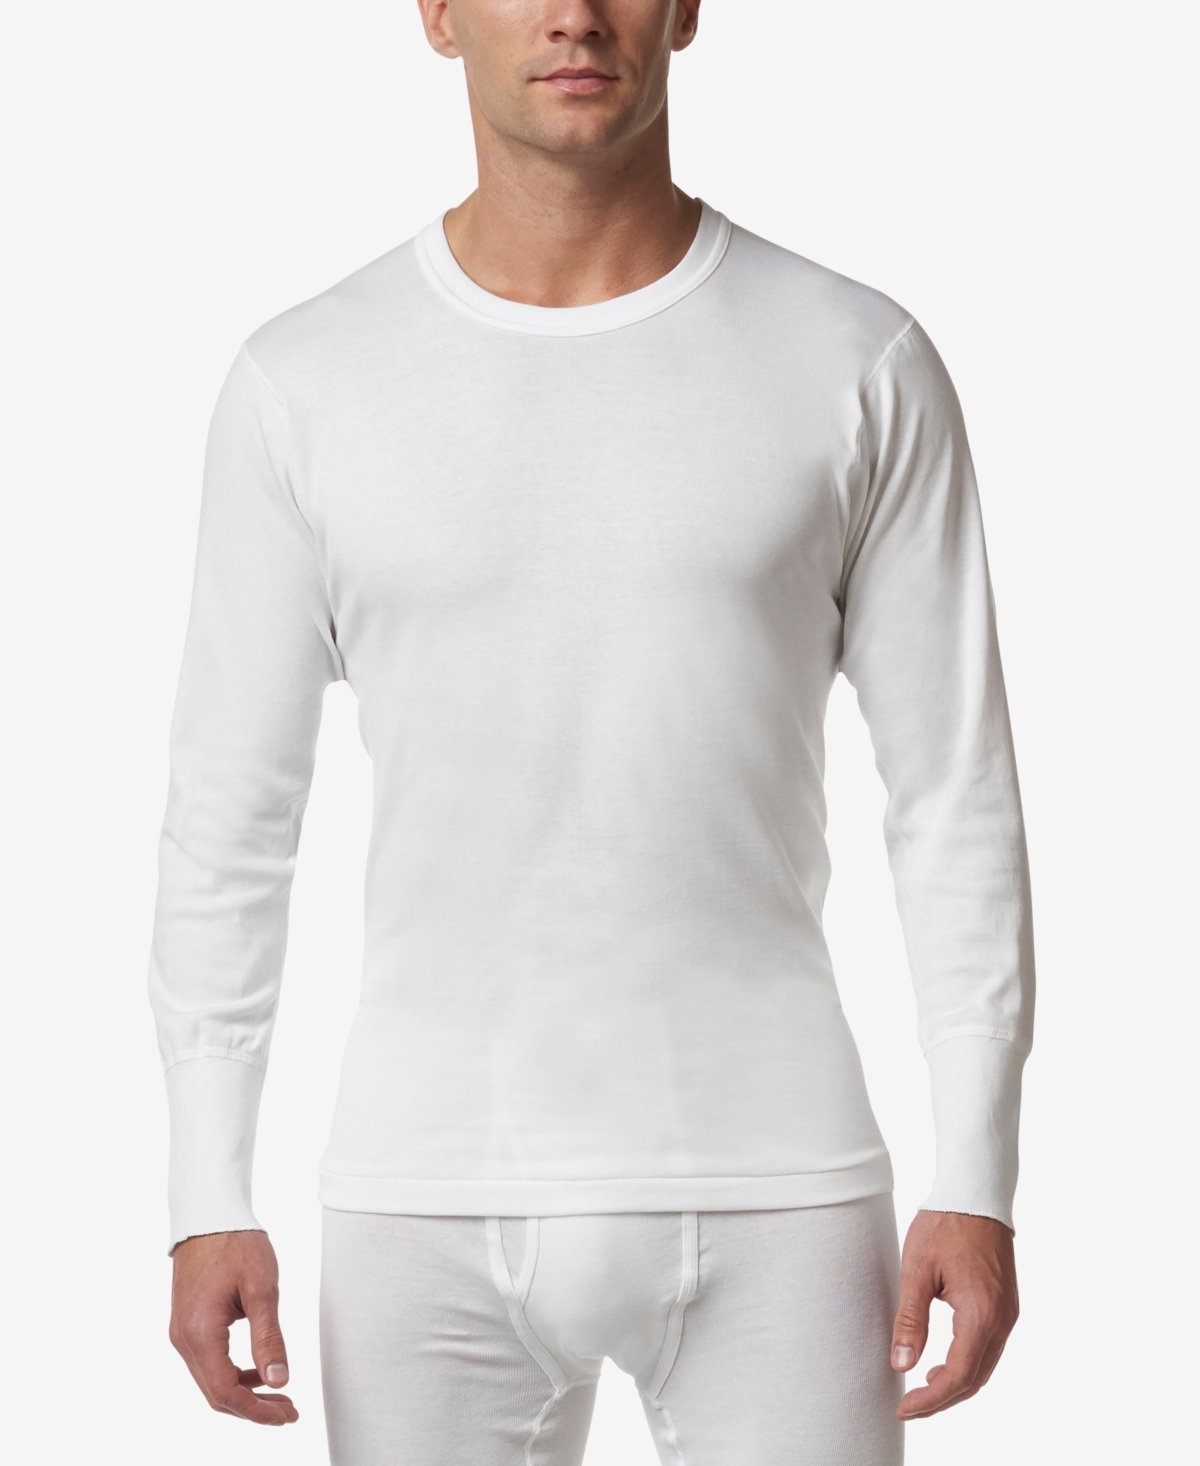 Men's Premium Cotton Rib Thermal Long Sleeve Undershirt - Gray Heather